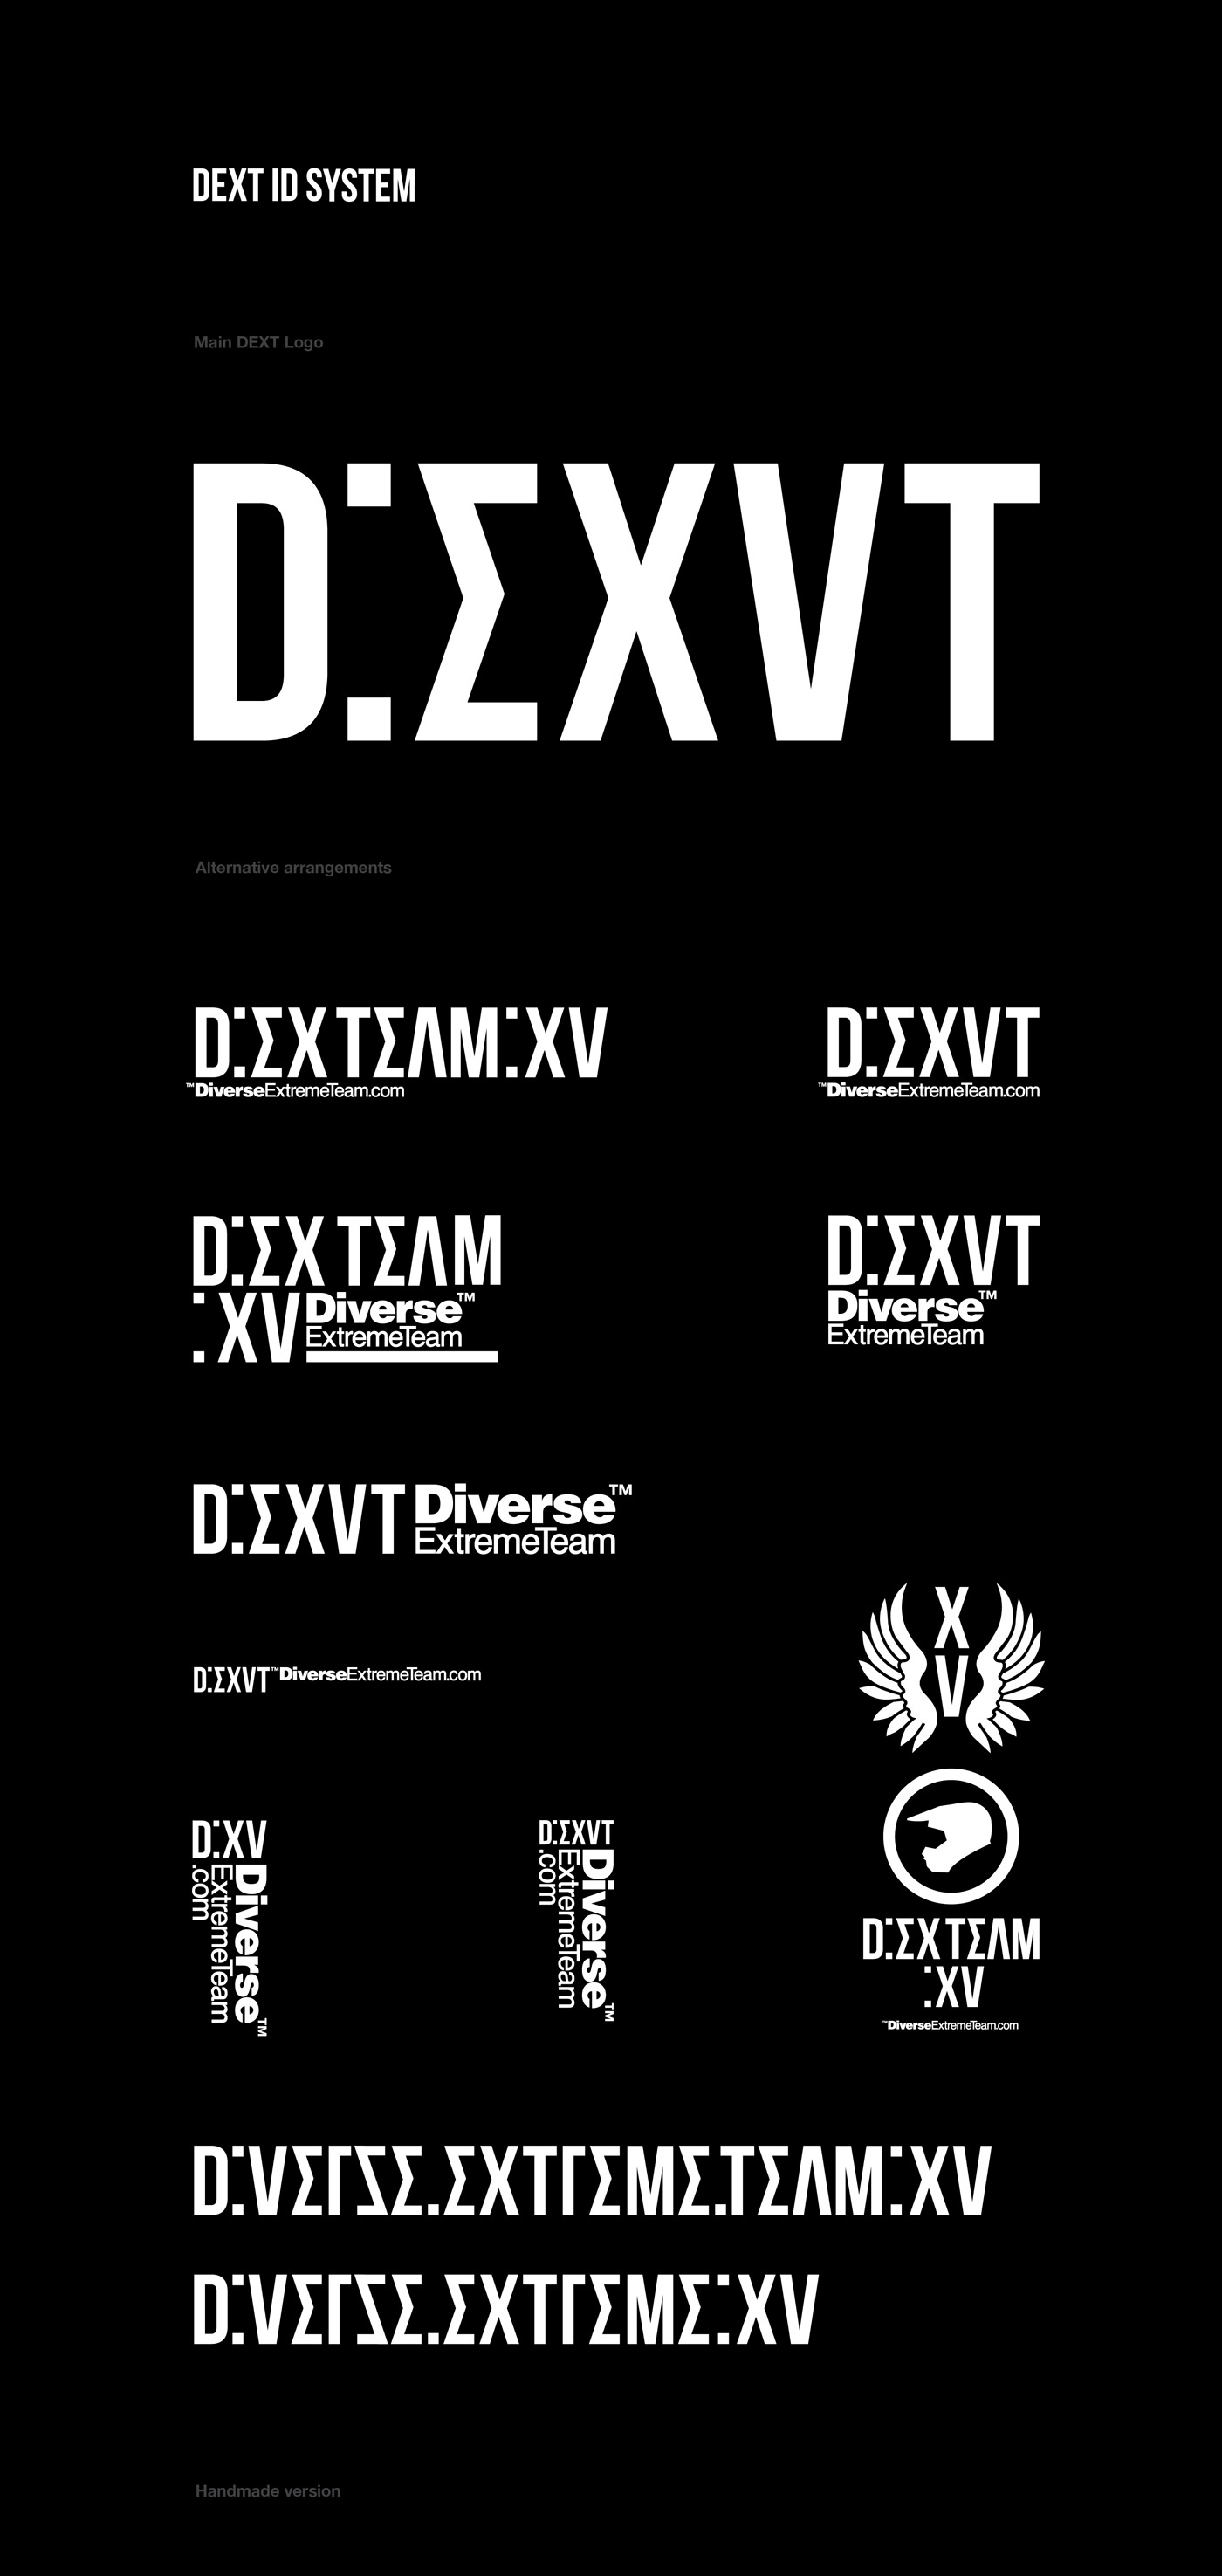 Oskar Podolski O . ESU™1 for Diverse Extreme Team XV on Behance